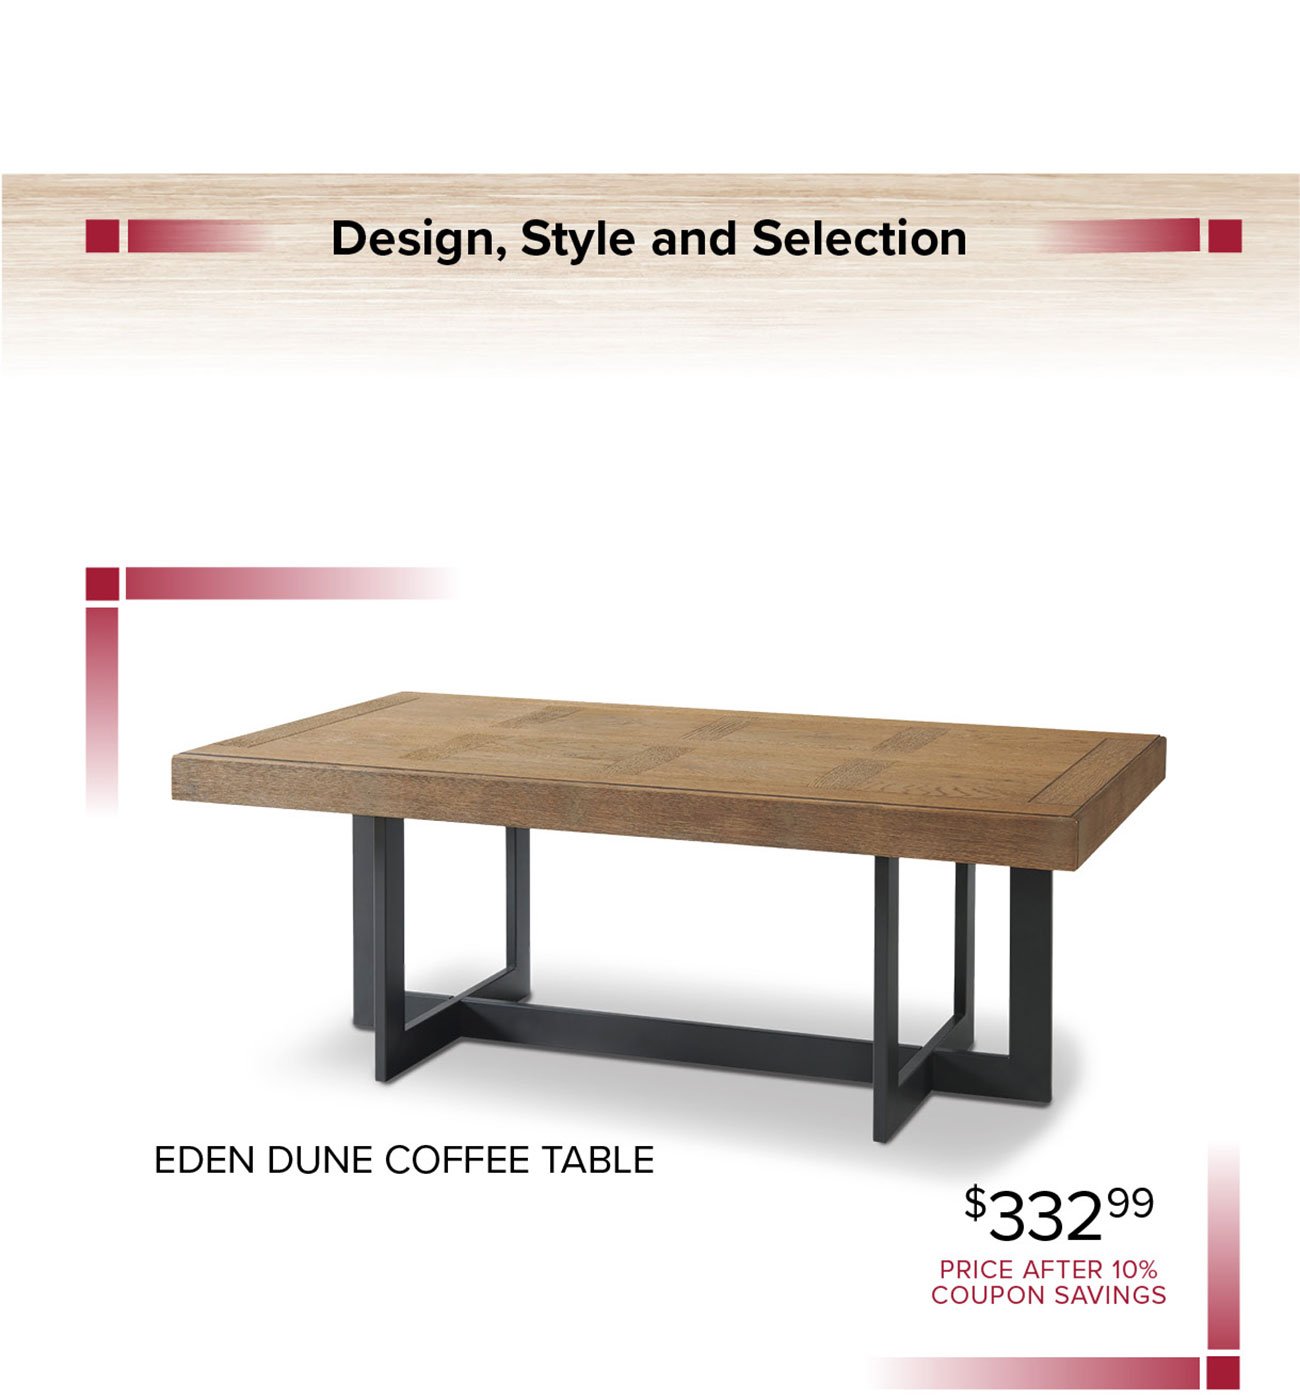 Eden-dune-coffee-table